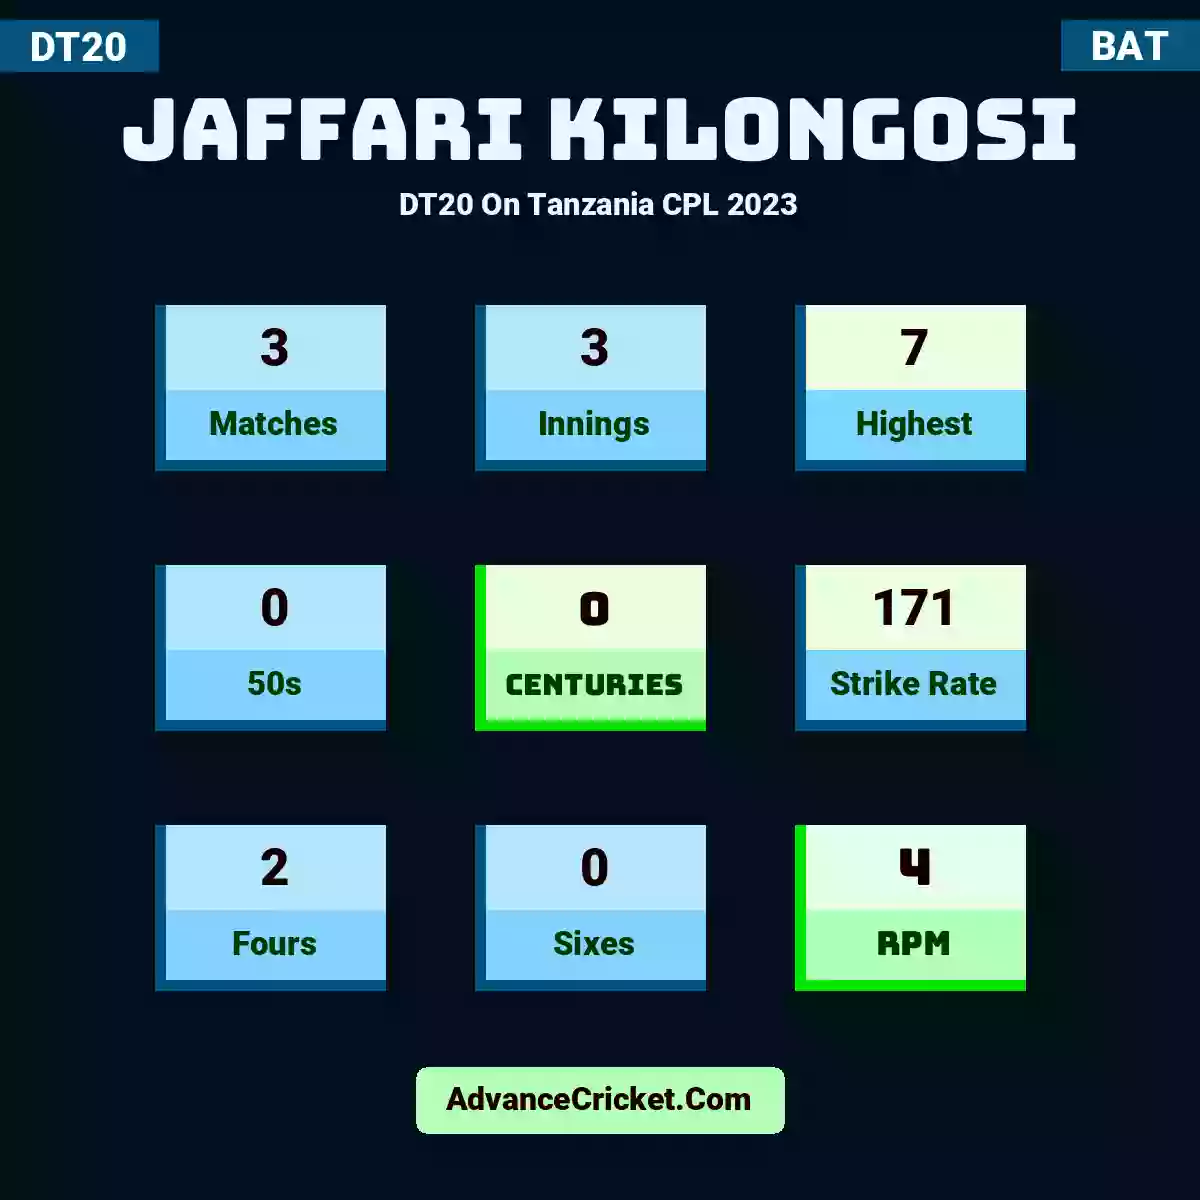 Jaffari Kilongosi DT20  On Tanzania CPL 2023, Jaffari Kilongosi played 3 matches, scored 7 runs as highest, 0 half-centuries, and 0 centuries, with a strike rate of 171. J.Kilongosi hit 2 fours and 0 sixes, with an RPM of 4.